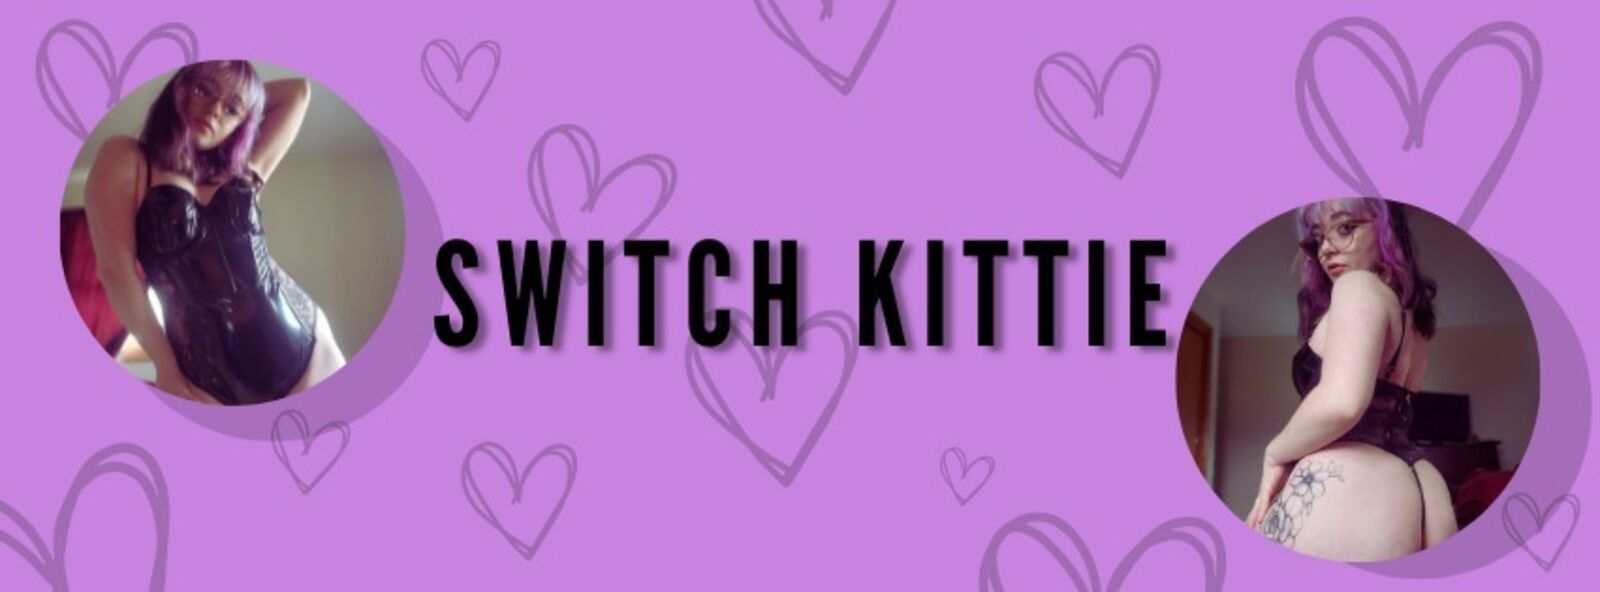 See Switch Kittie profile